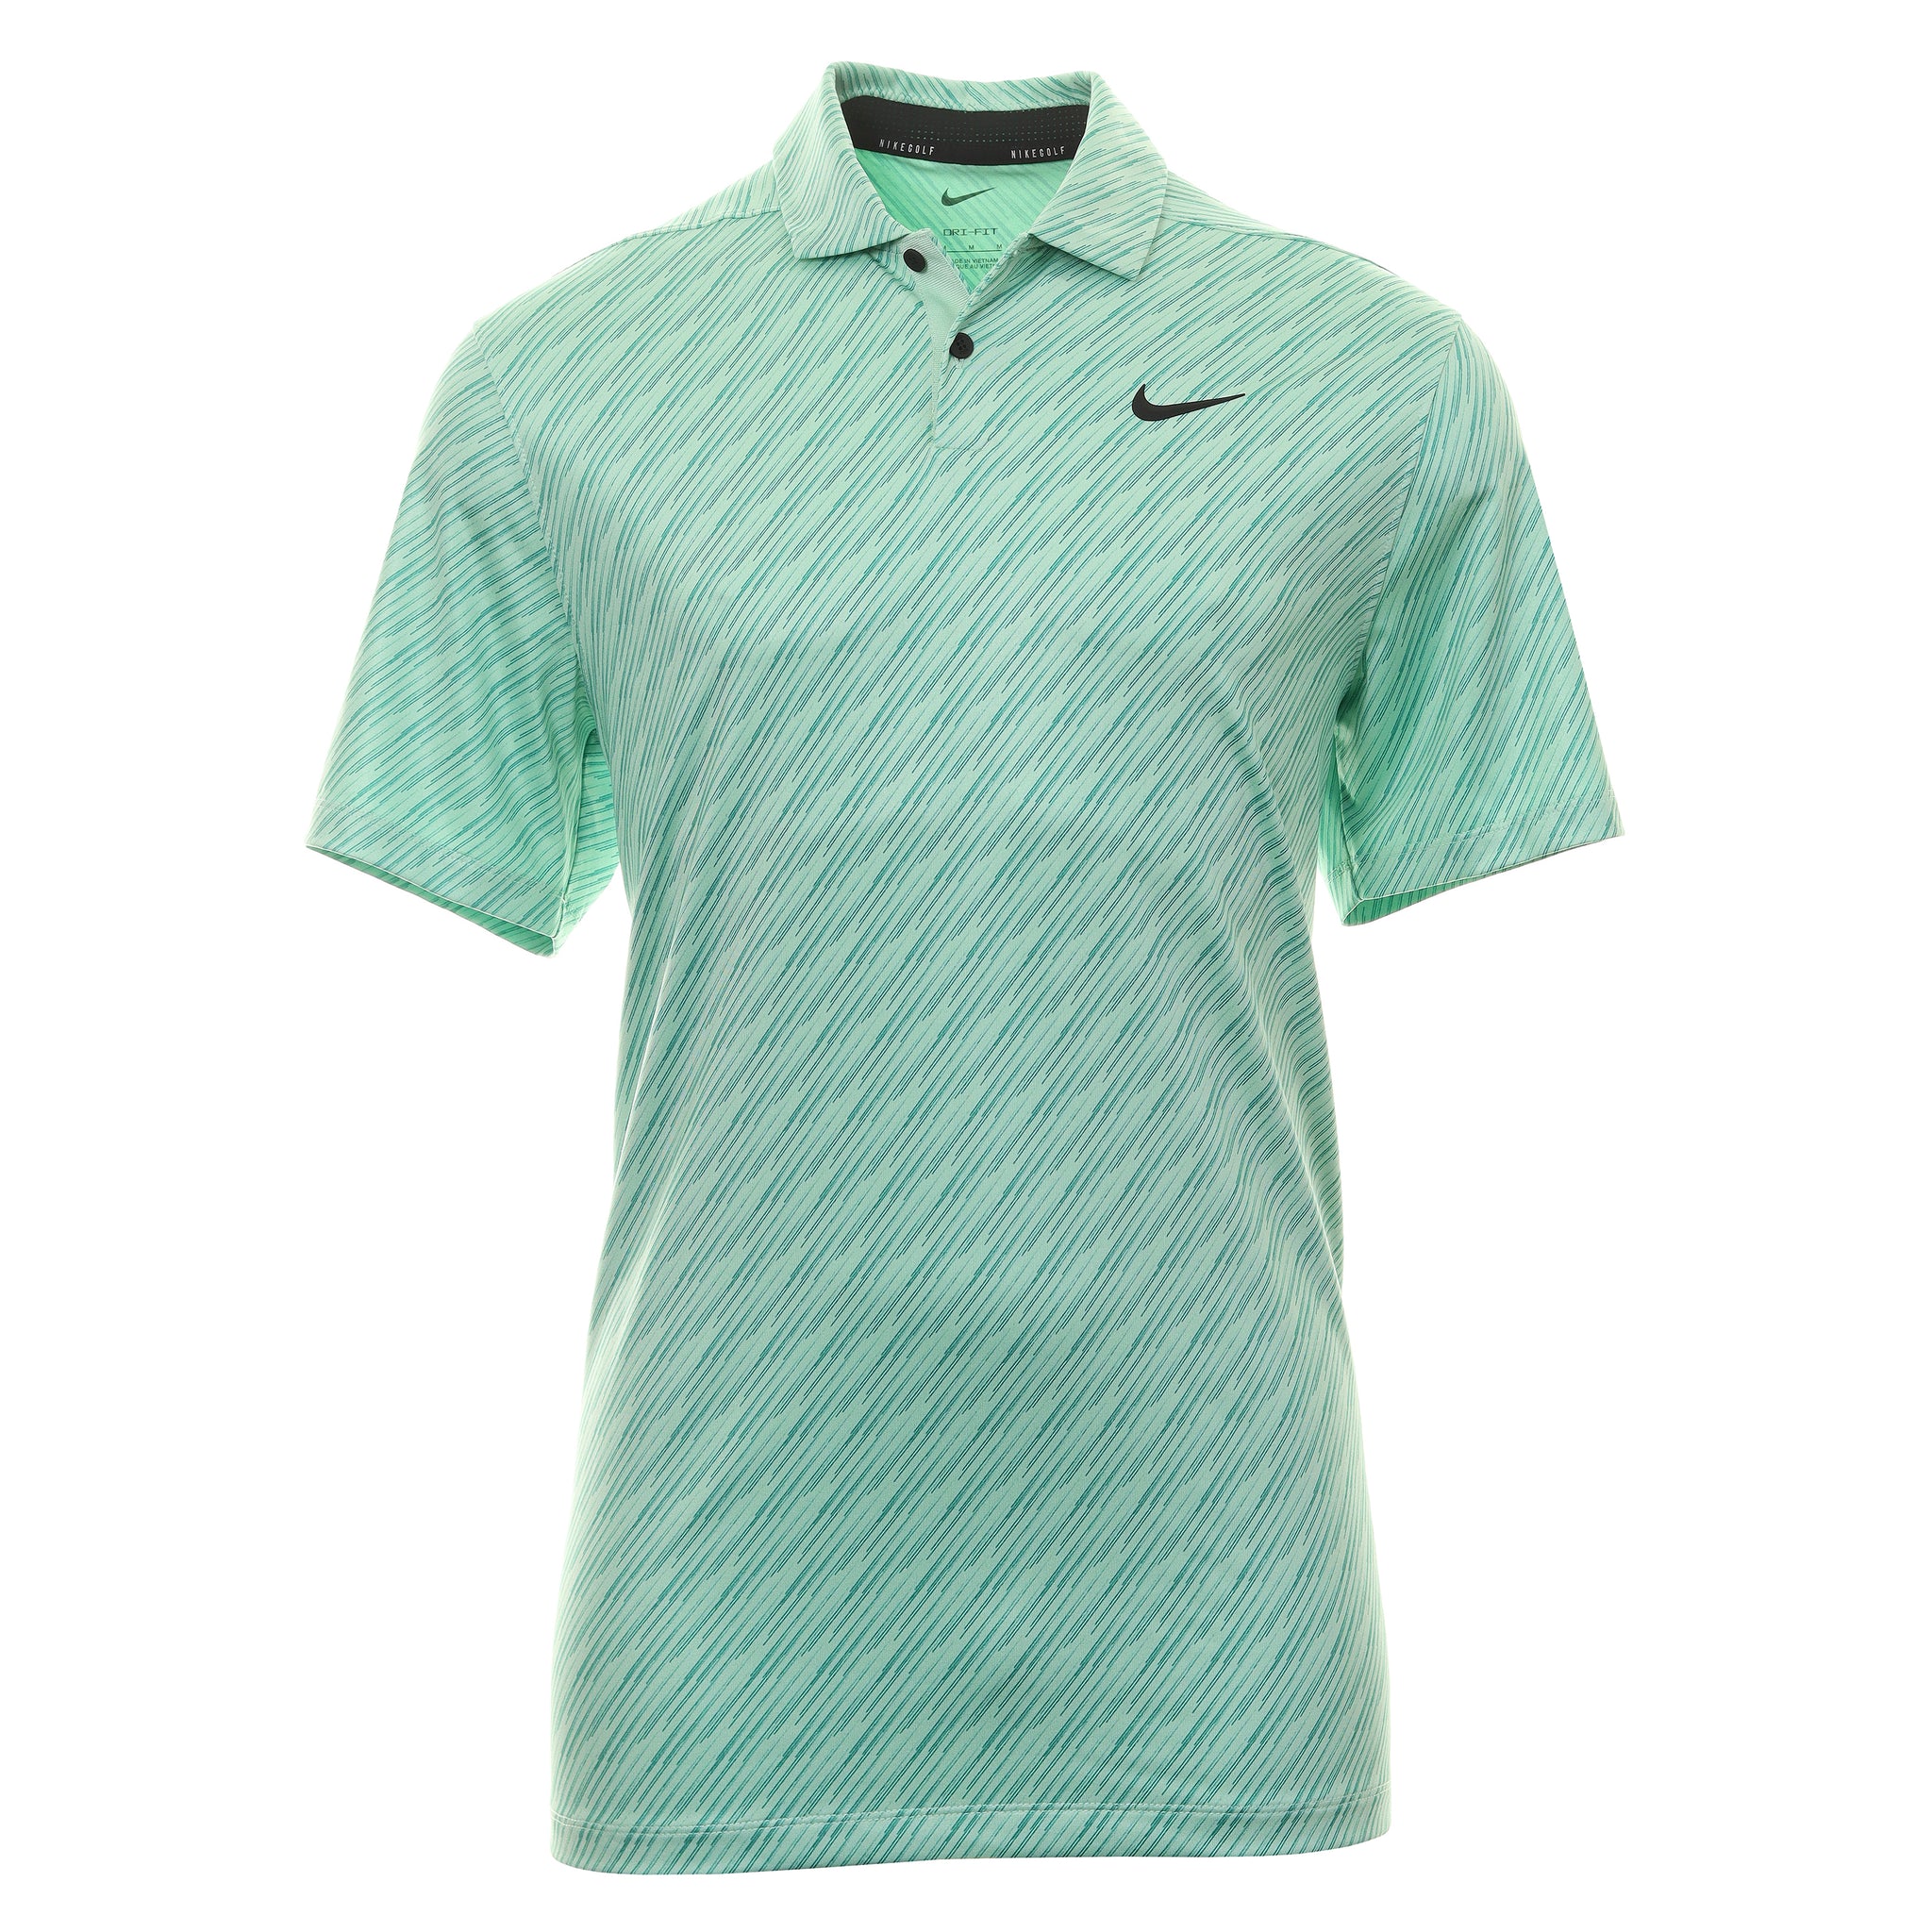 Nike Golf Dry Vapor Stripe Shirt DH0808 Enamel Green 308 | Function18 ...